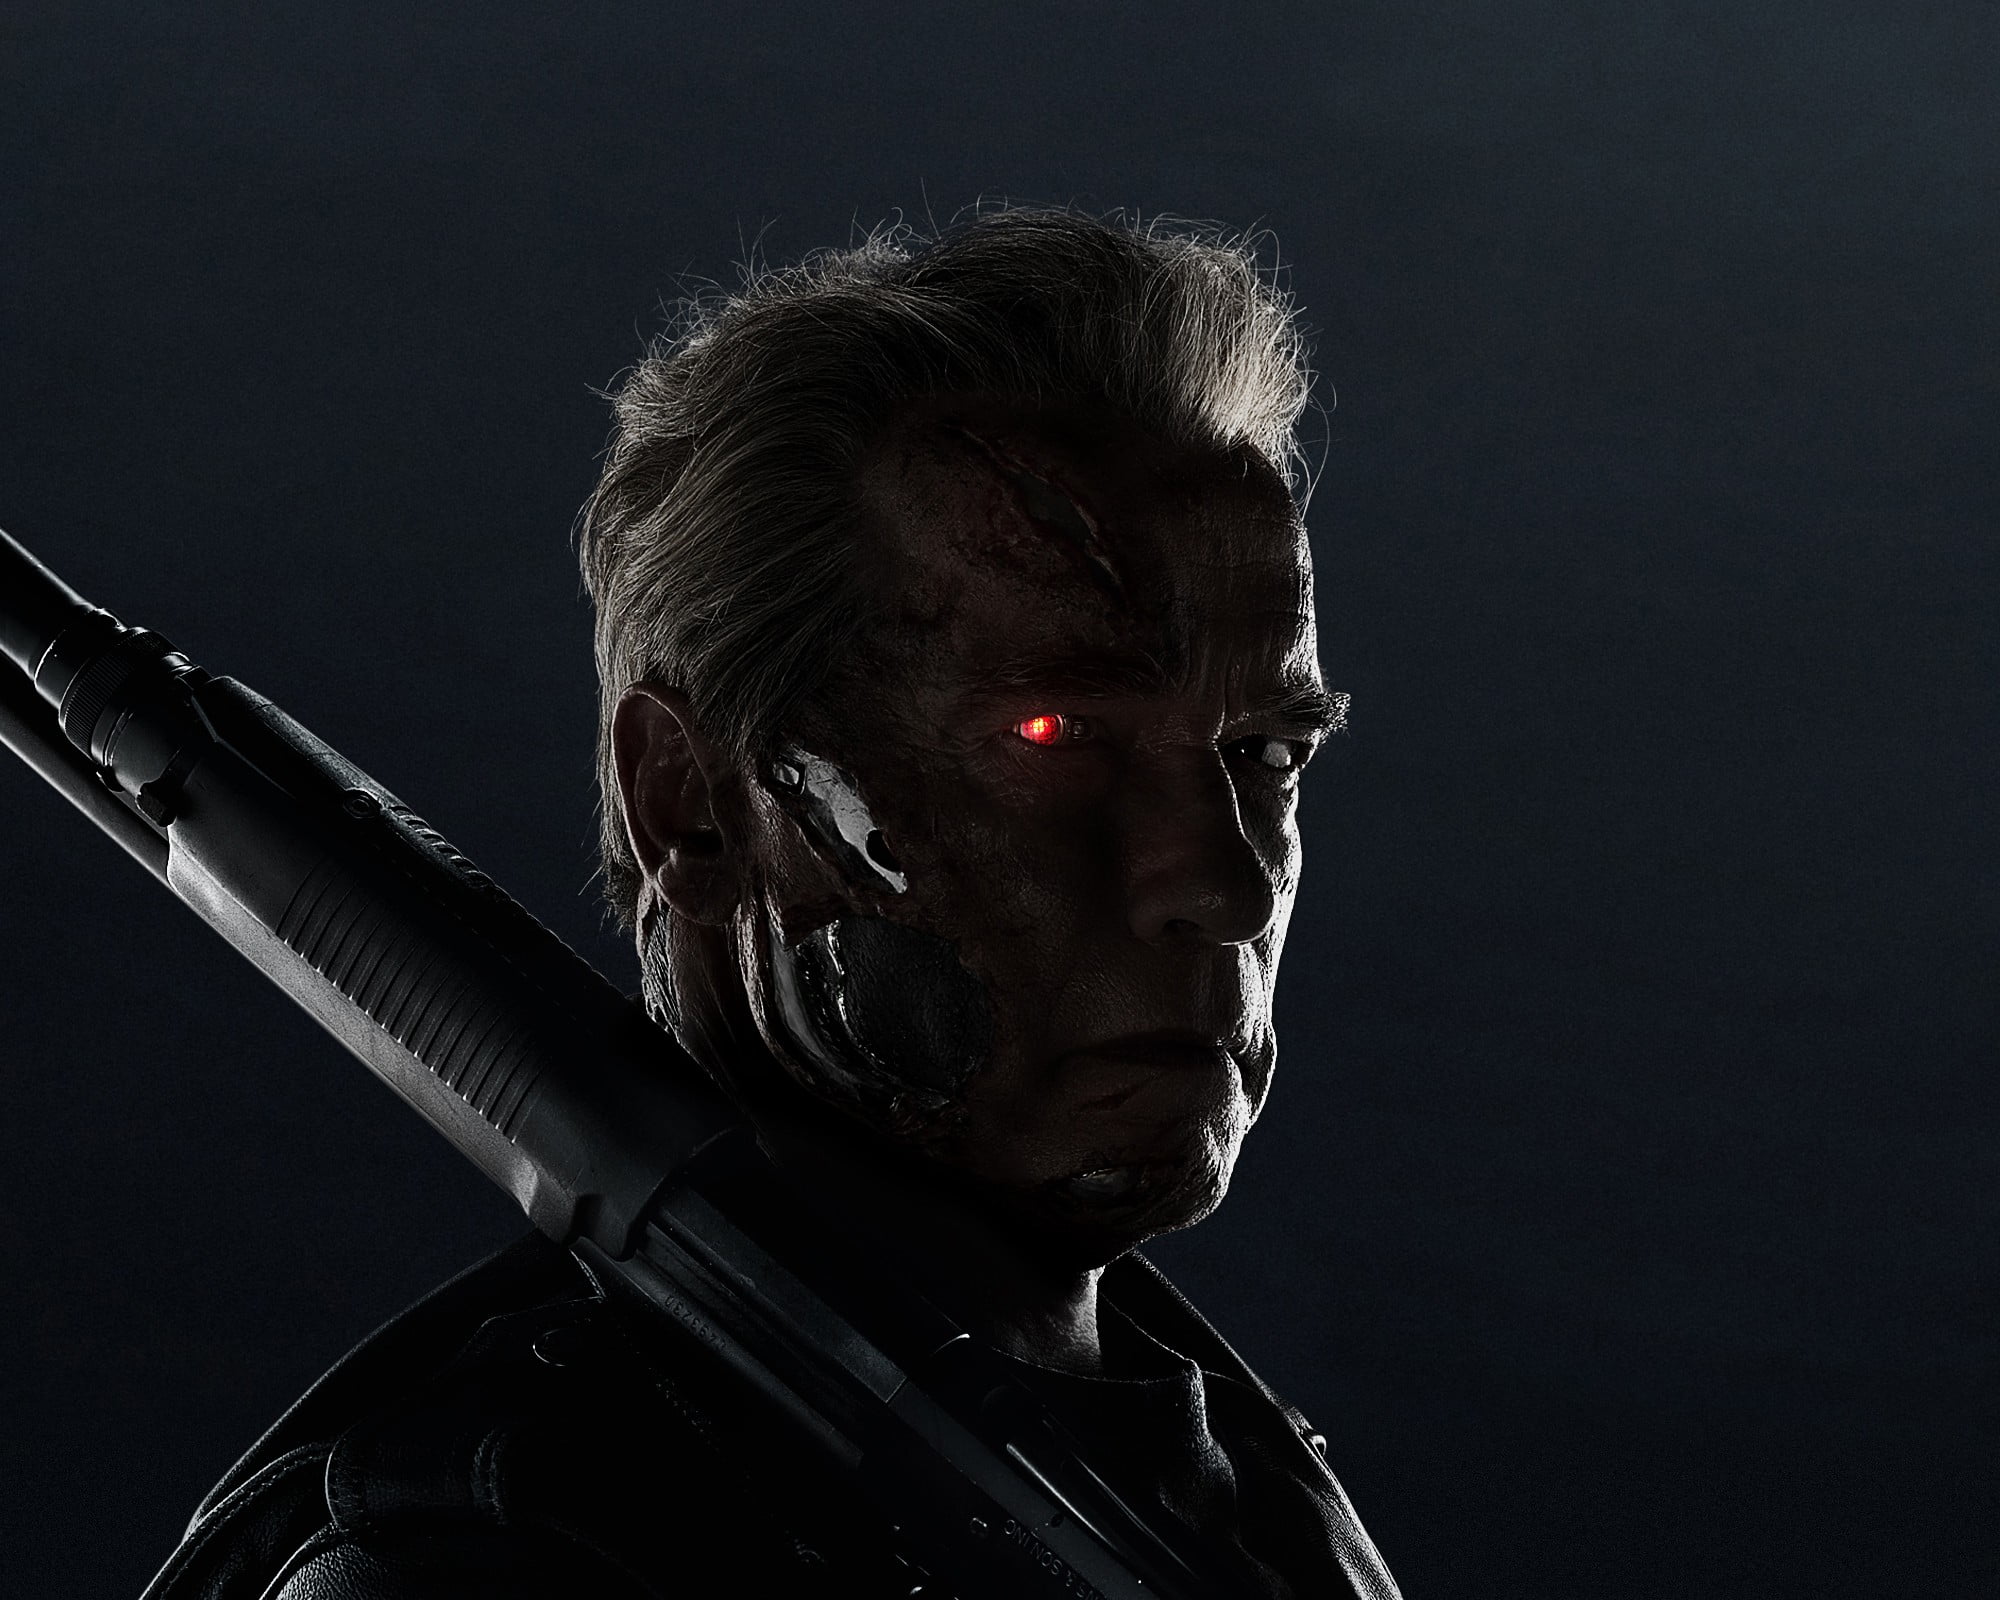 Terminator by Arnold Schwarzenegger, Terminator Genisys, cyborg